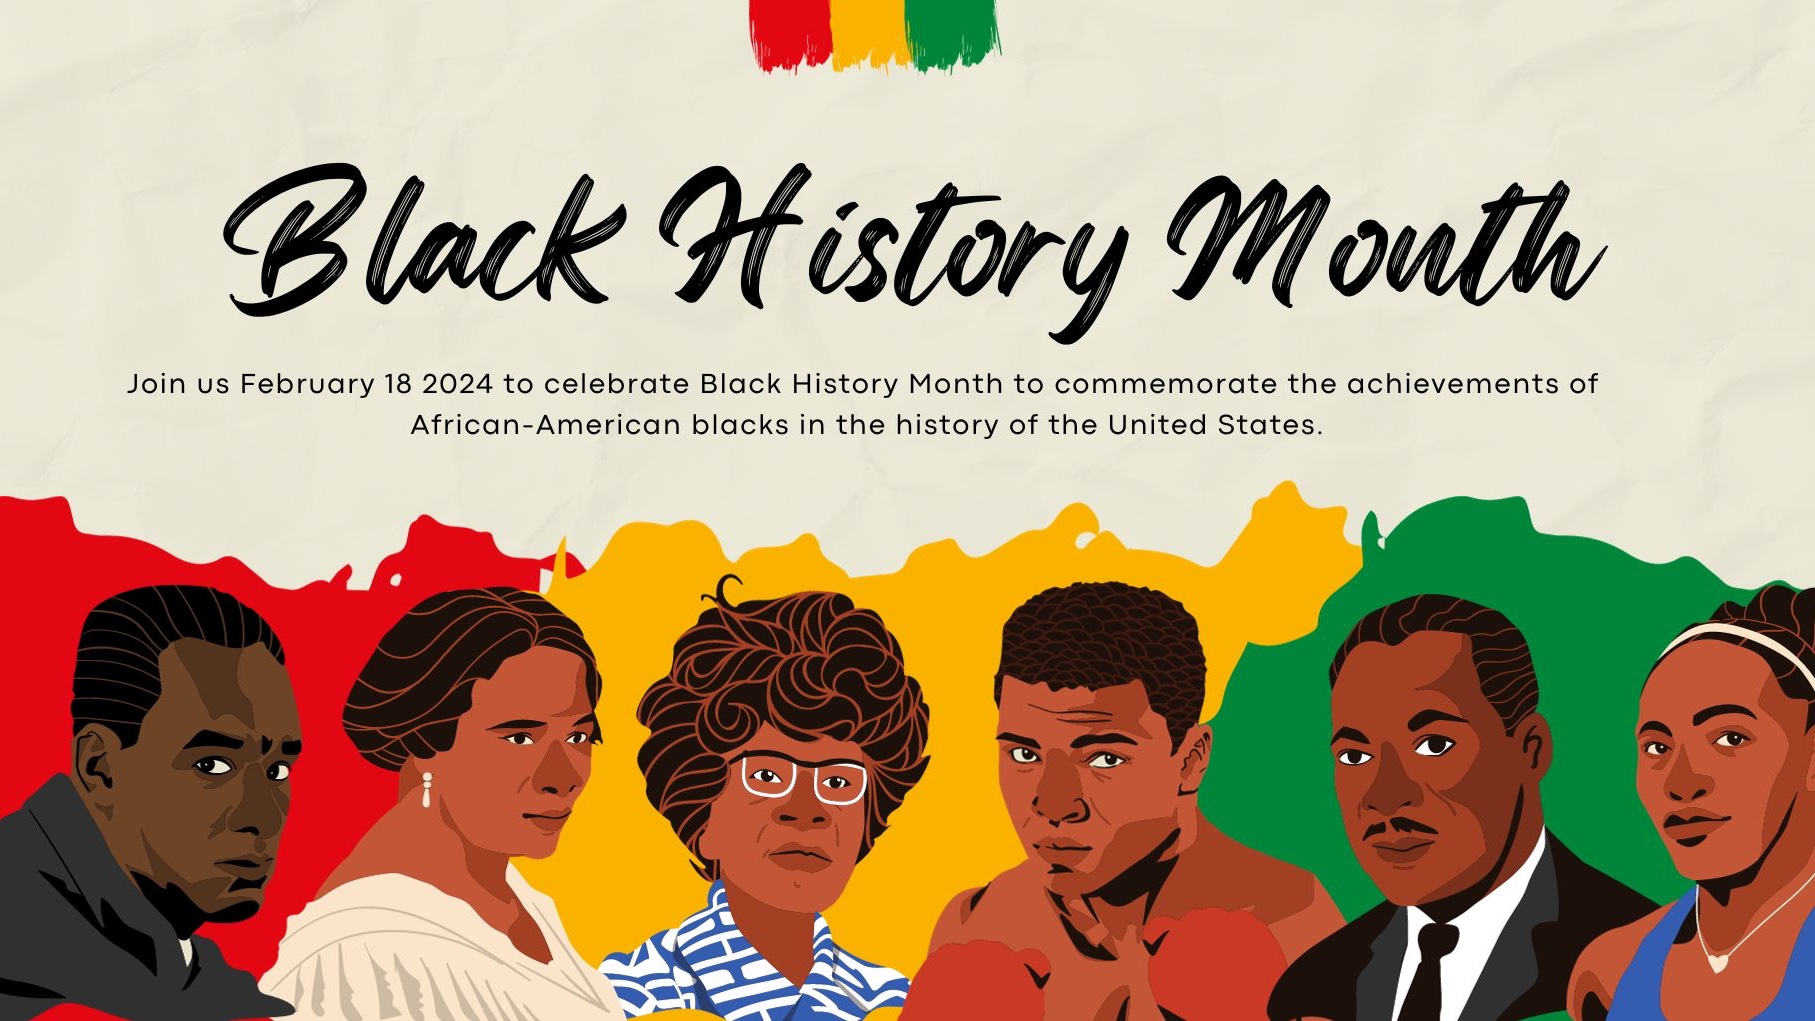 2024 Los Angeles City Black History Month Festival SponsorMyEvent